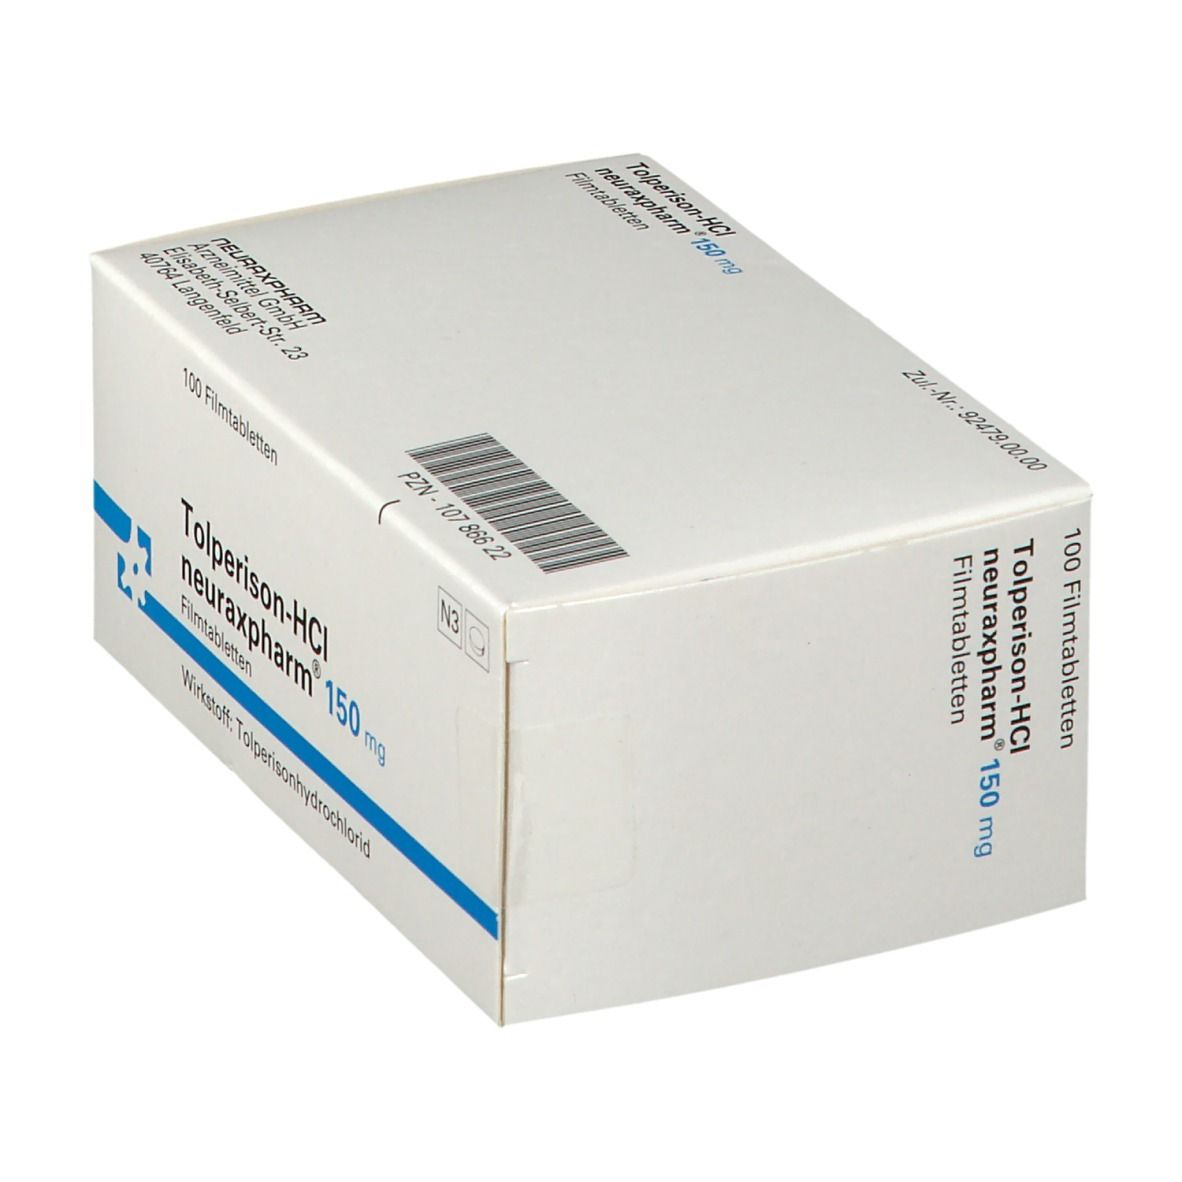 Tolperison-HCl neuraxpharm® 150 mg